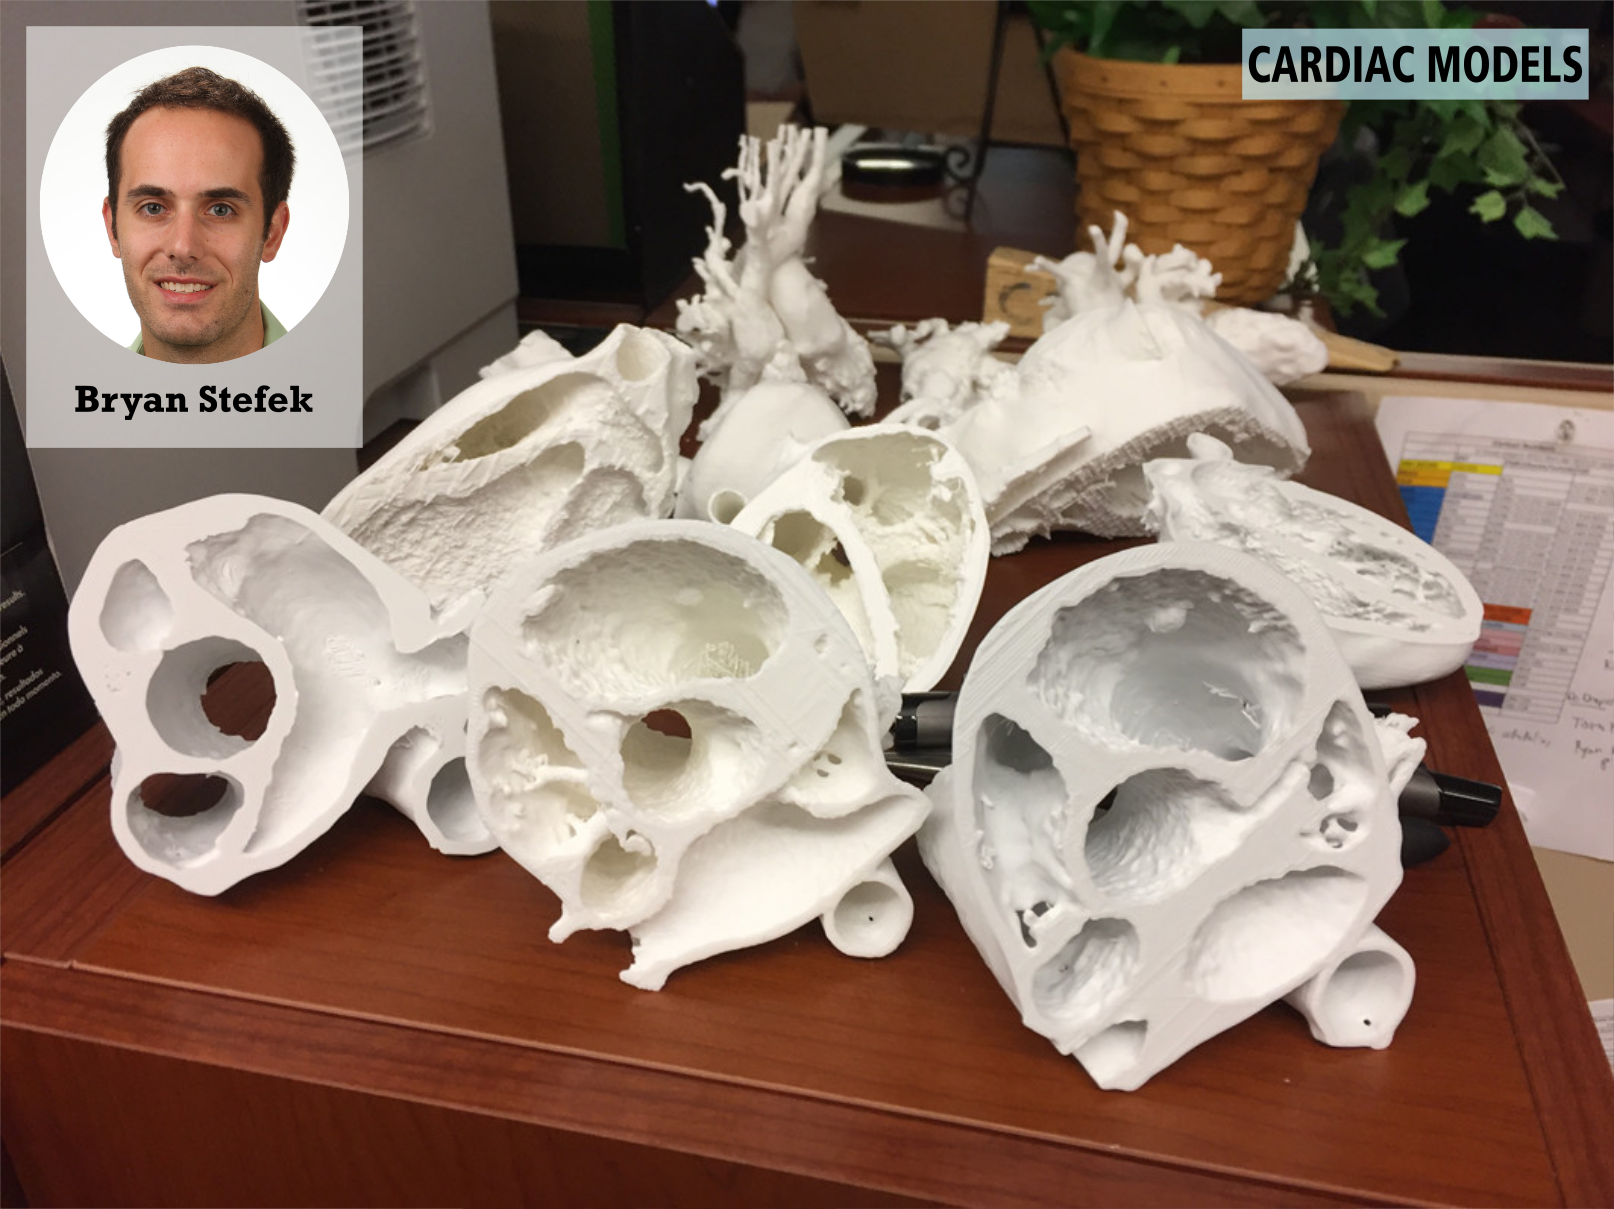 Bryan Stefek and his 3D cardiac models